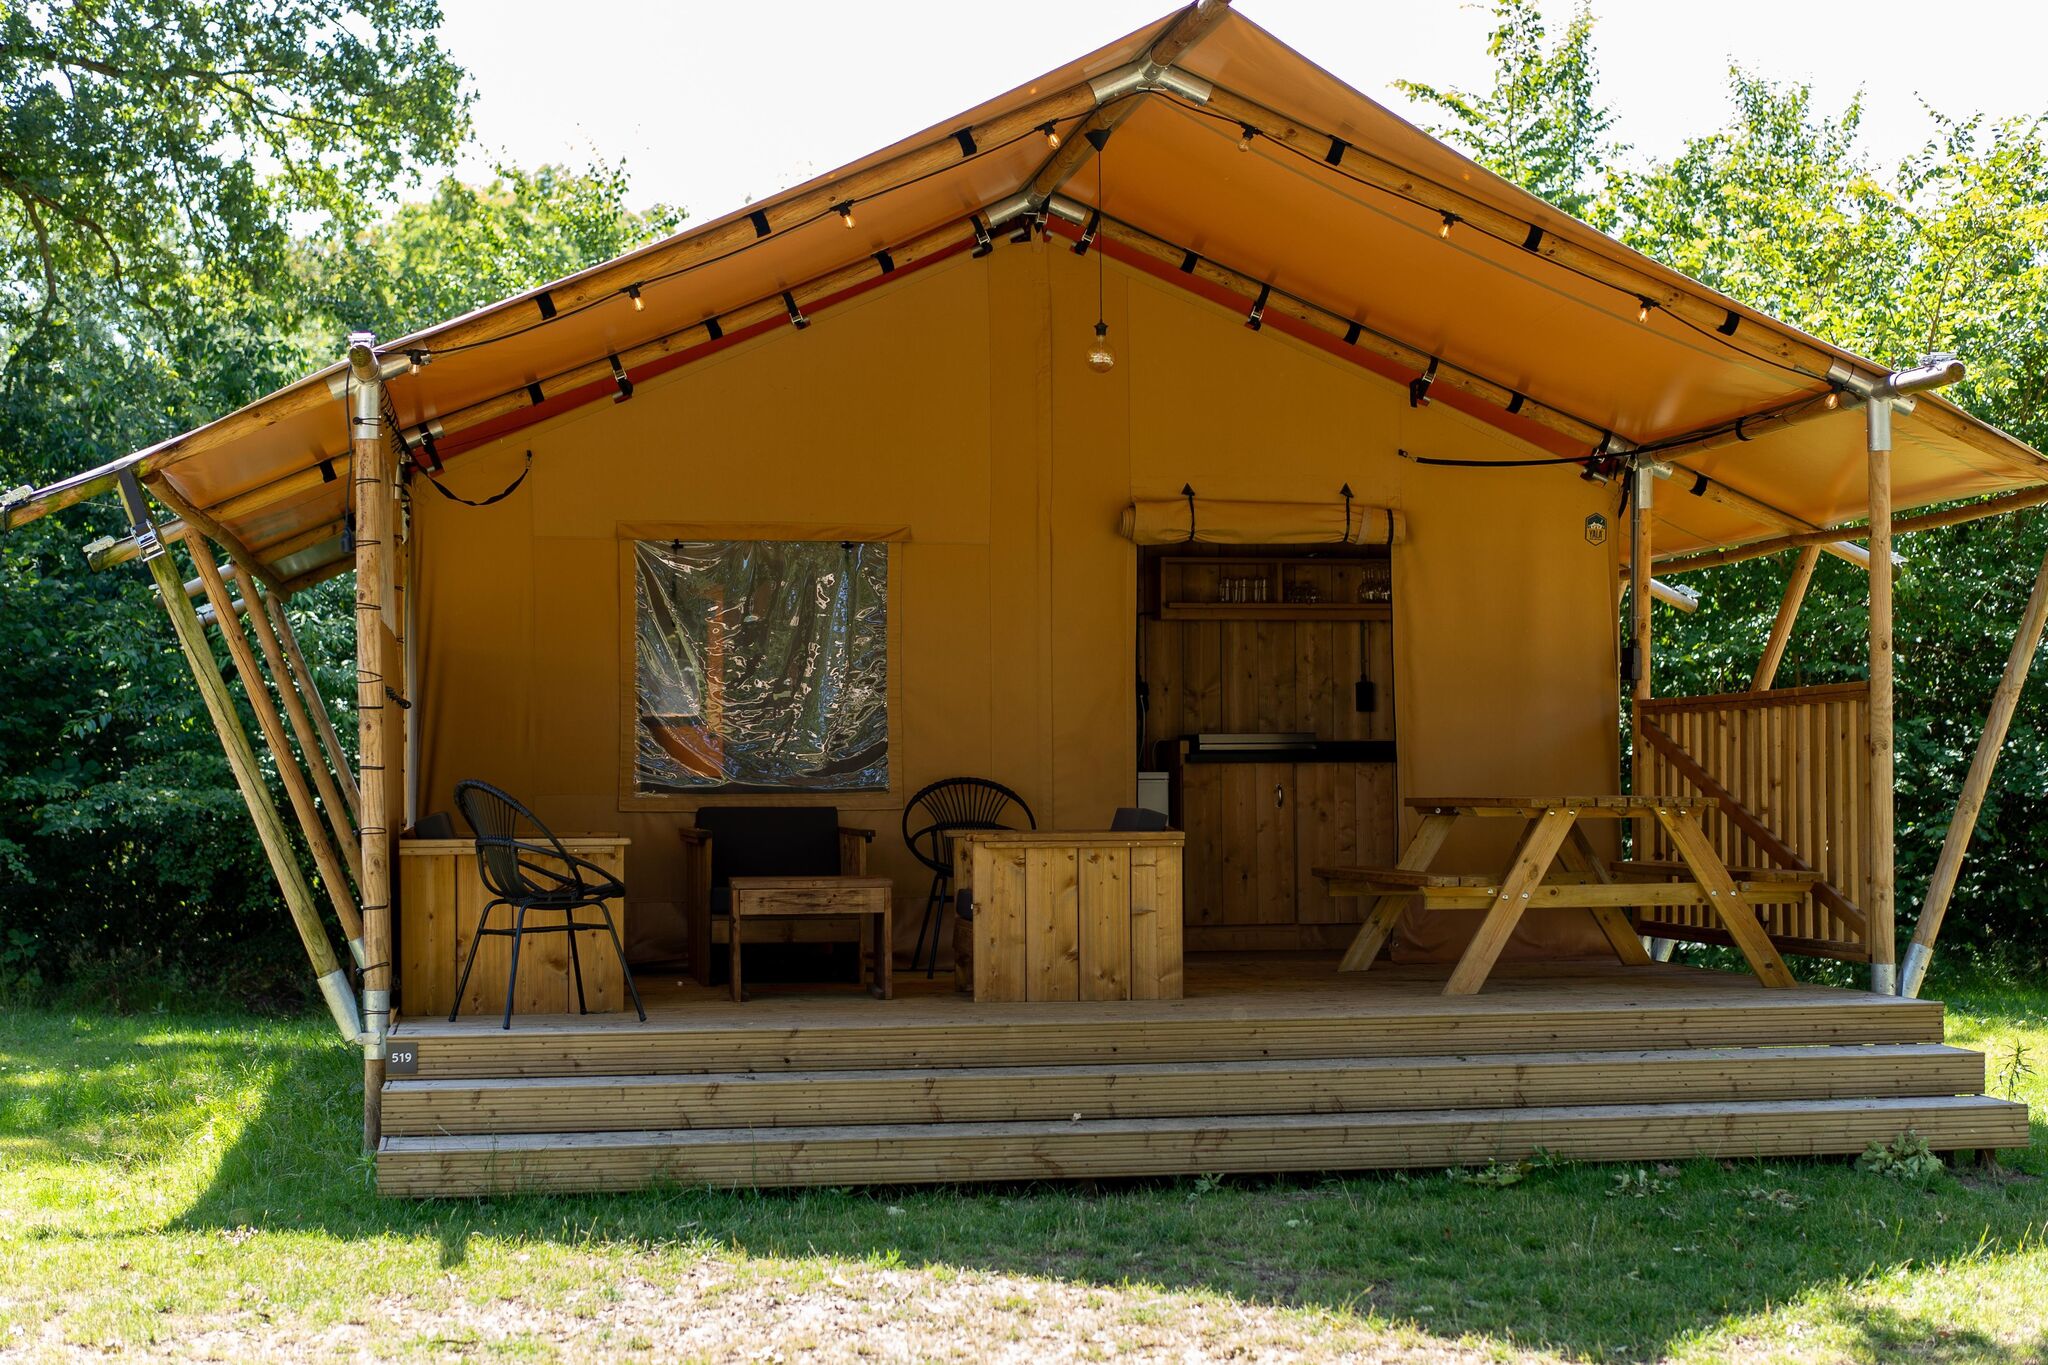 Nice safari tent with bathroom, at Hunebedcentrum